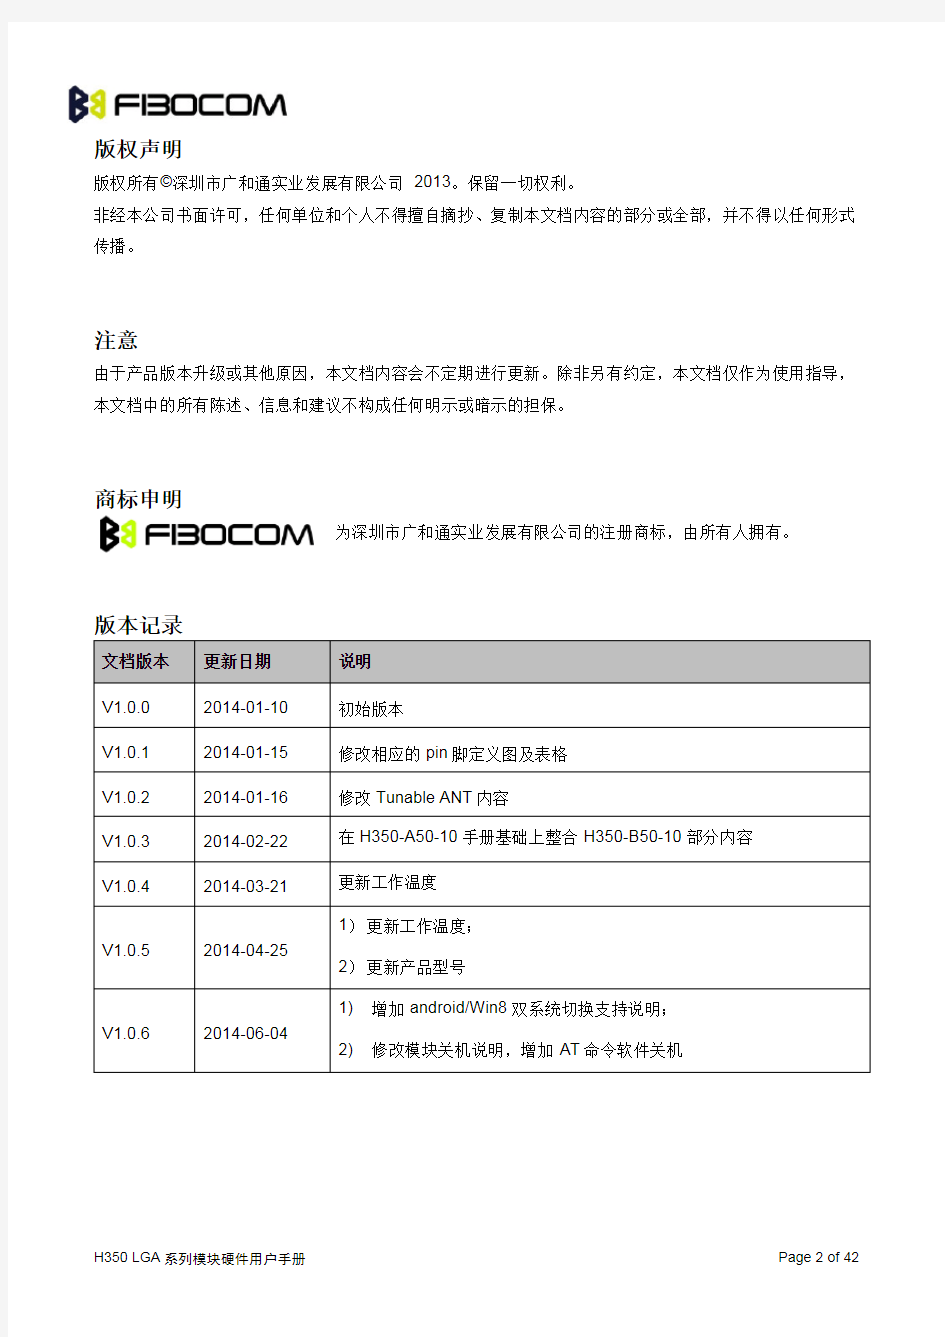 FIBOCOM_H350 LGA系列模块硬件用户手册_V1.0.6